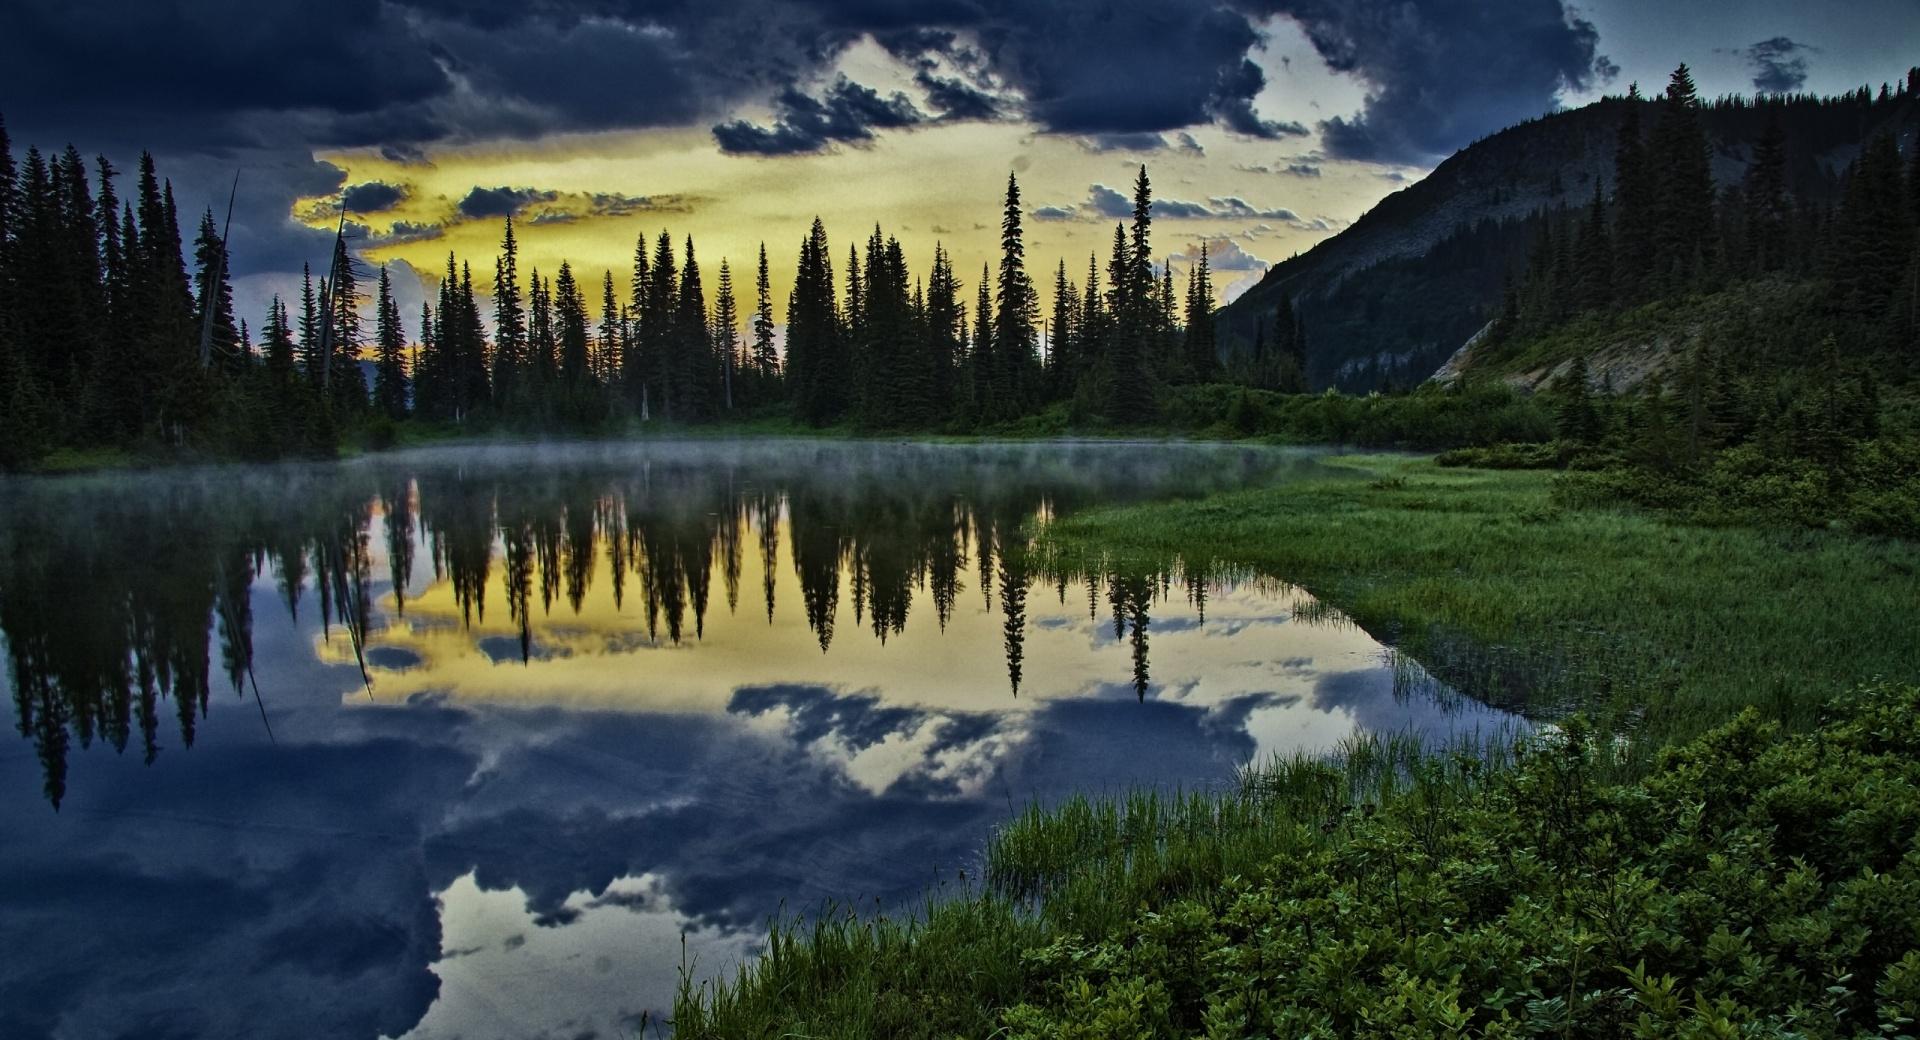 Lake Reflections At Sunset at 1024 x 1024 iPad size wallpapers HD quality